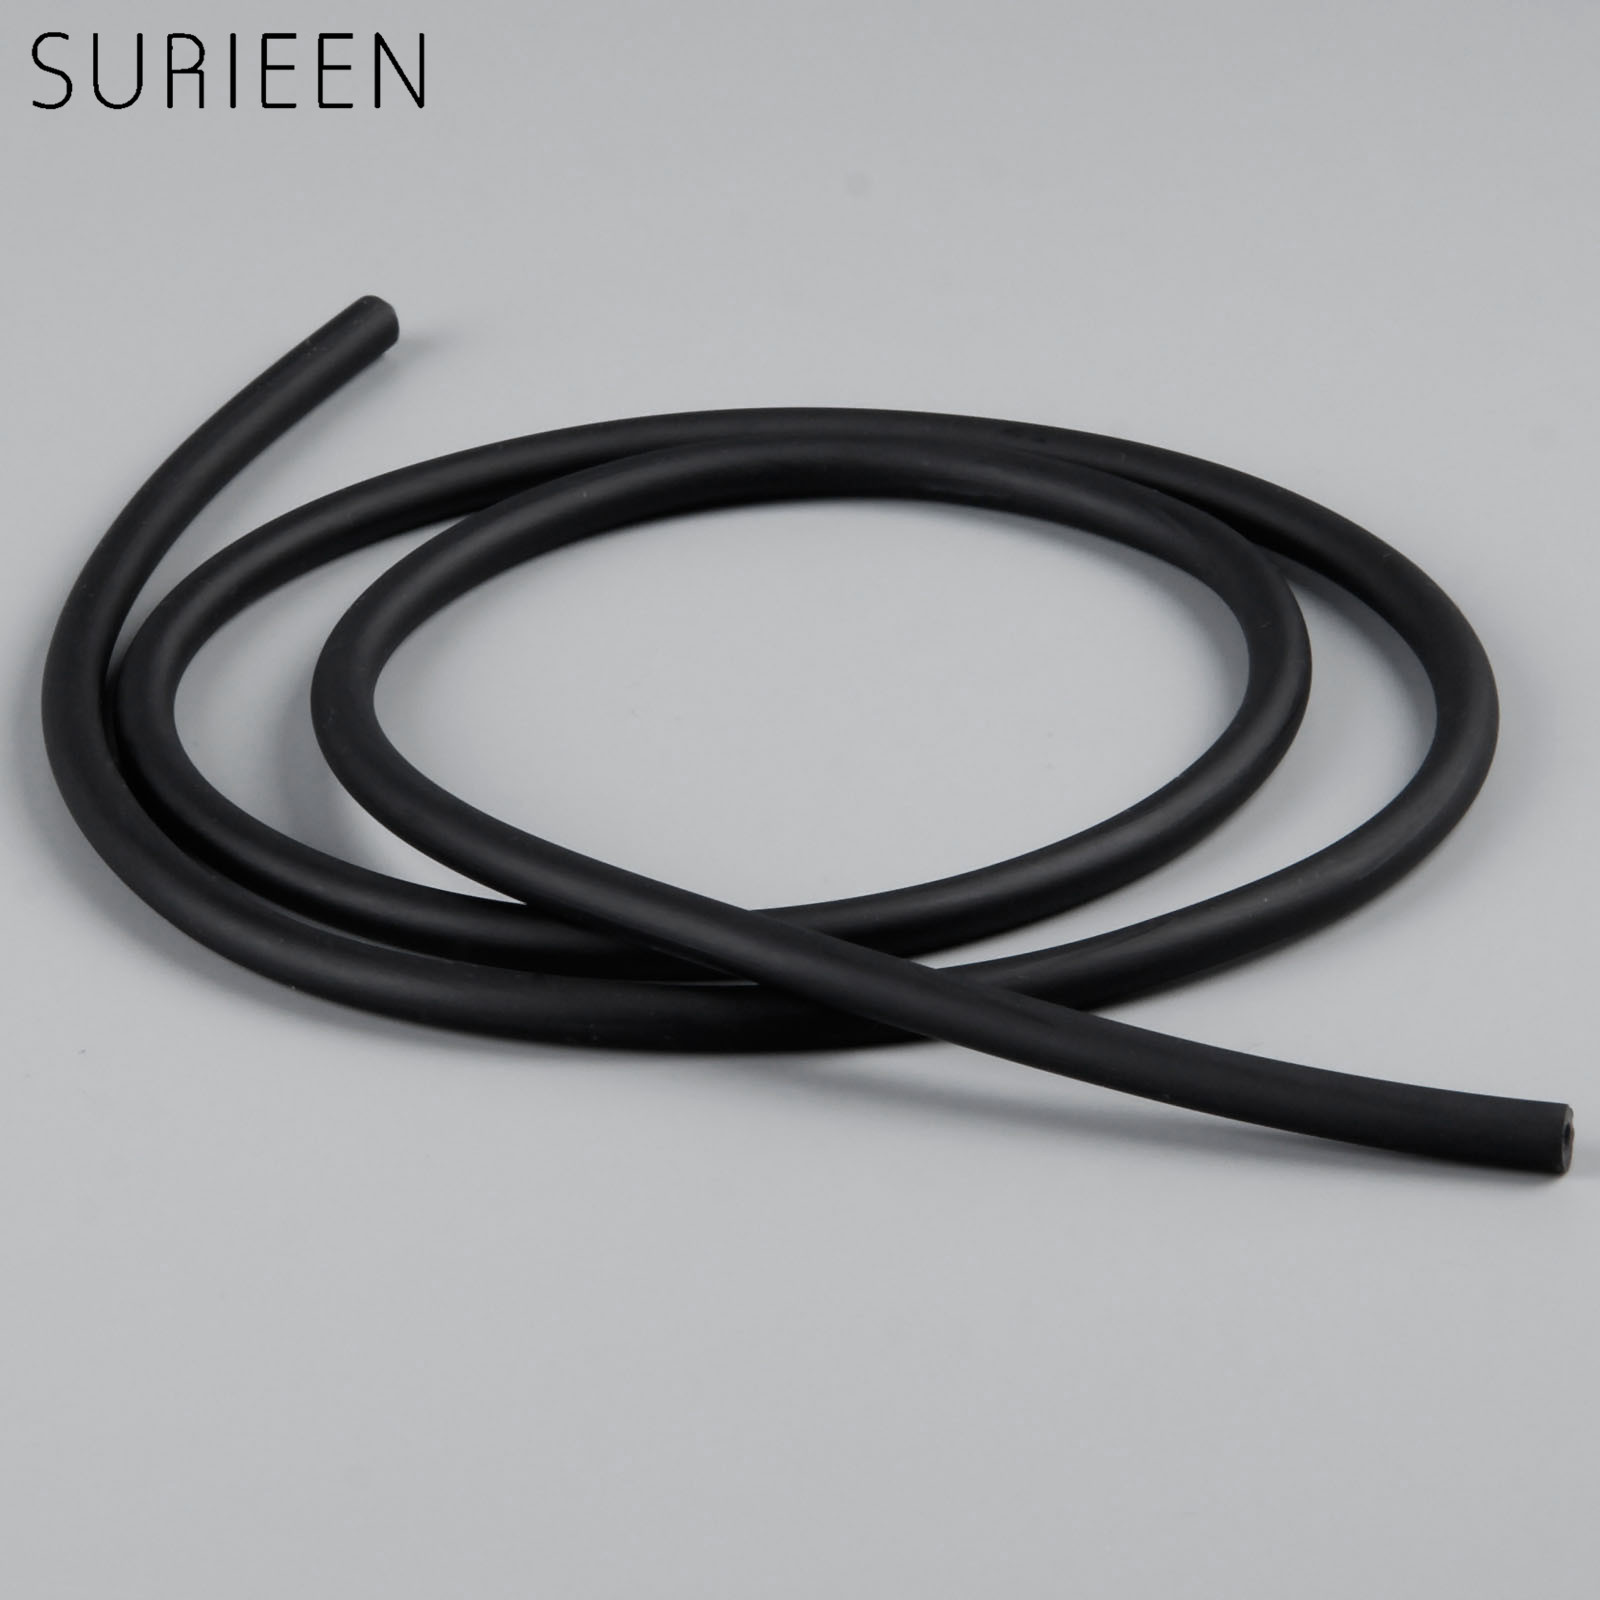 SURIEEN Black 1M 3mmx6mm Strong Natural Latex Tube Slingshot ...